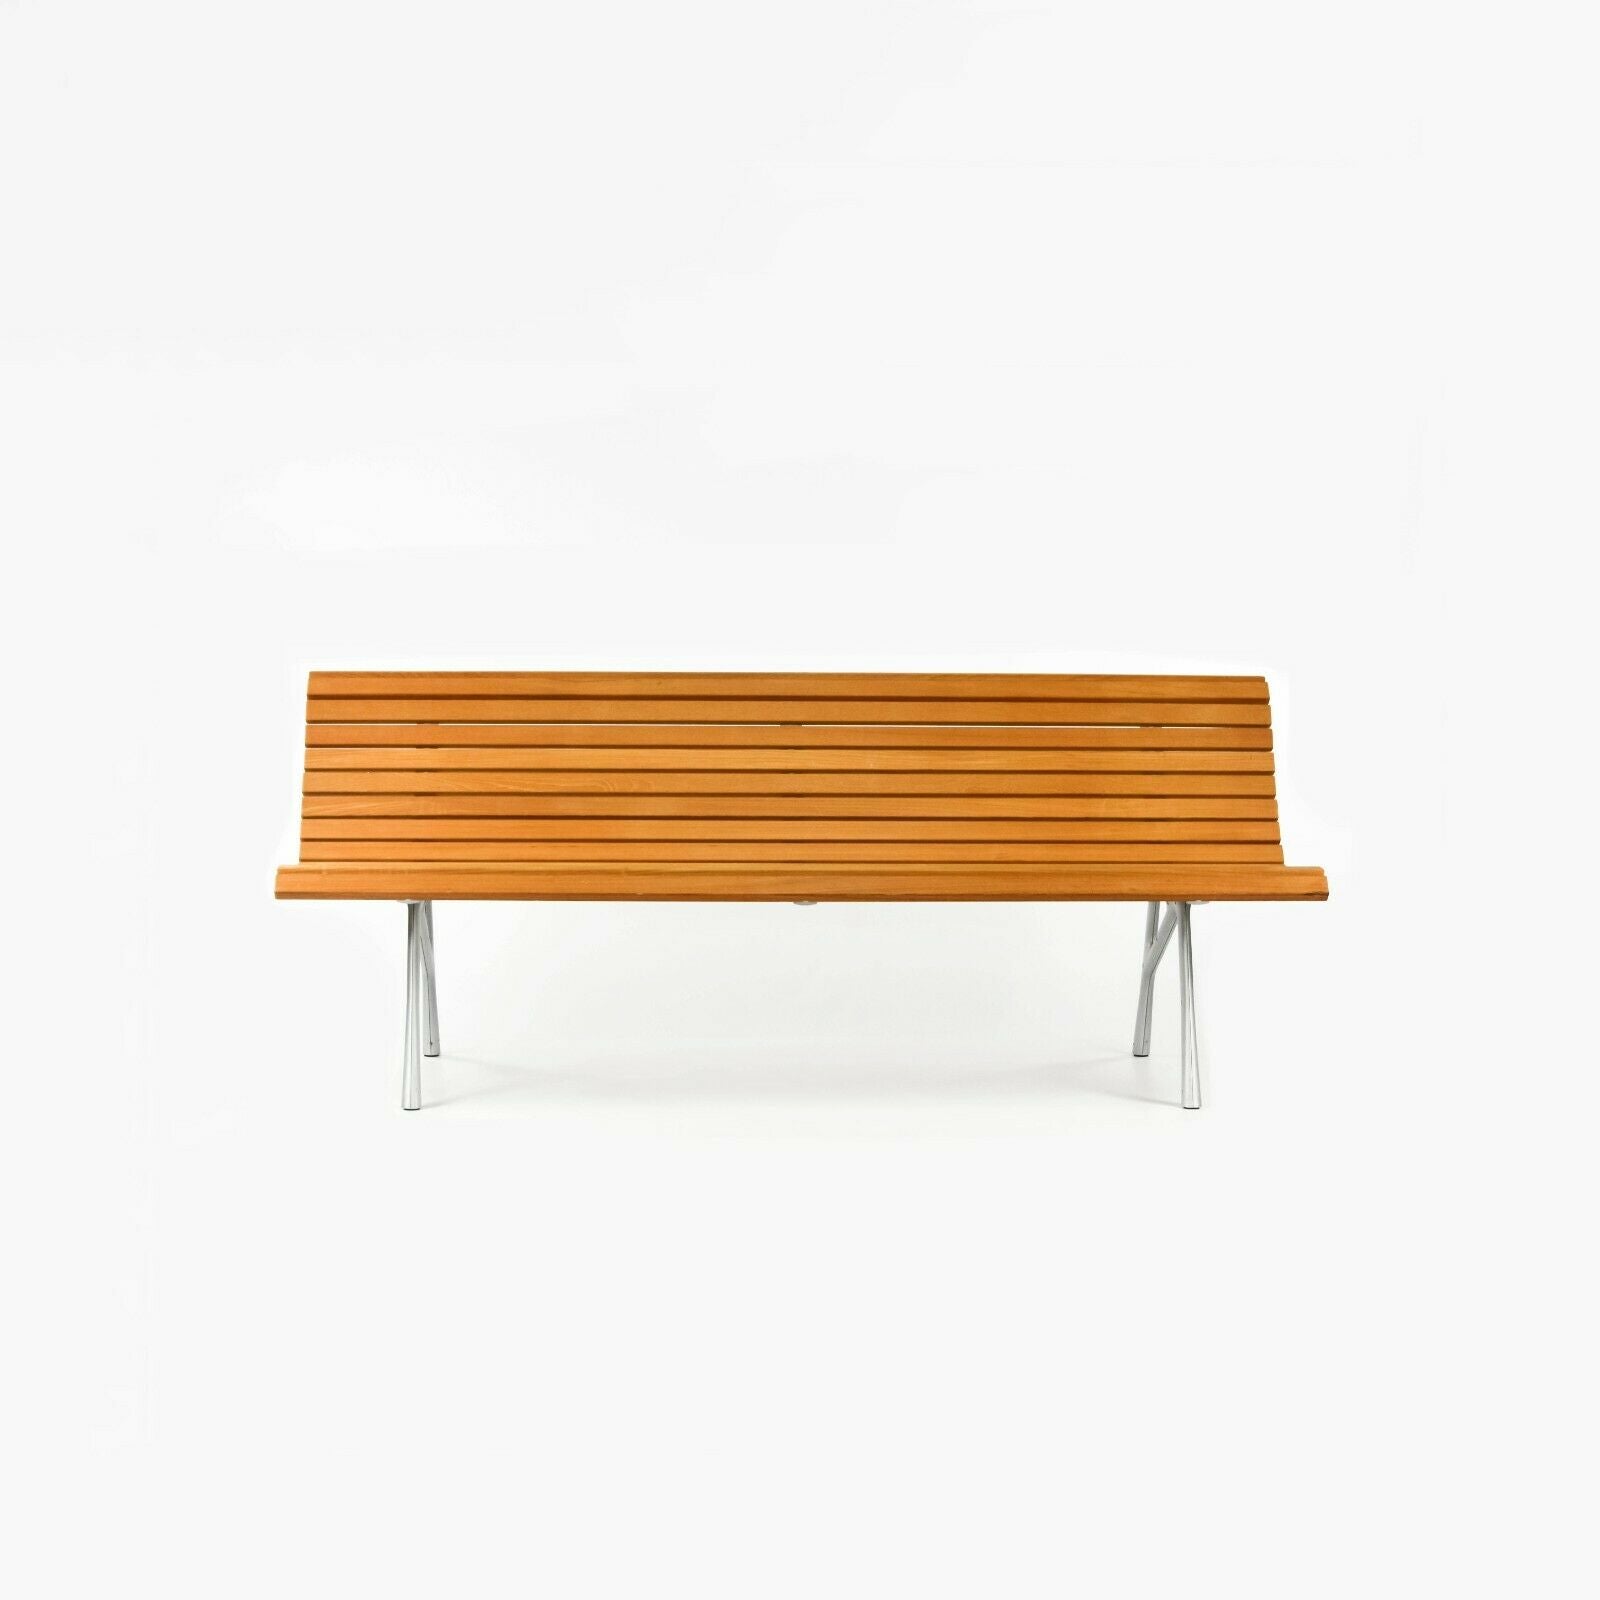 2010s Alias Teak Outdoor Three Seat Bench / Settee in Cast Aluminum by Alberto Meda